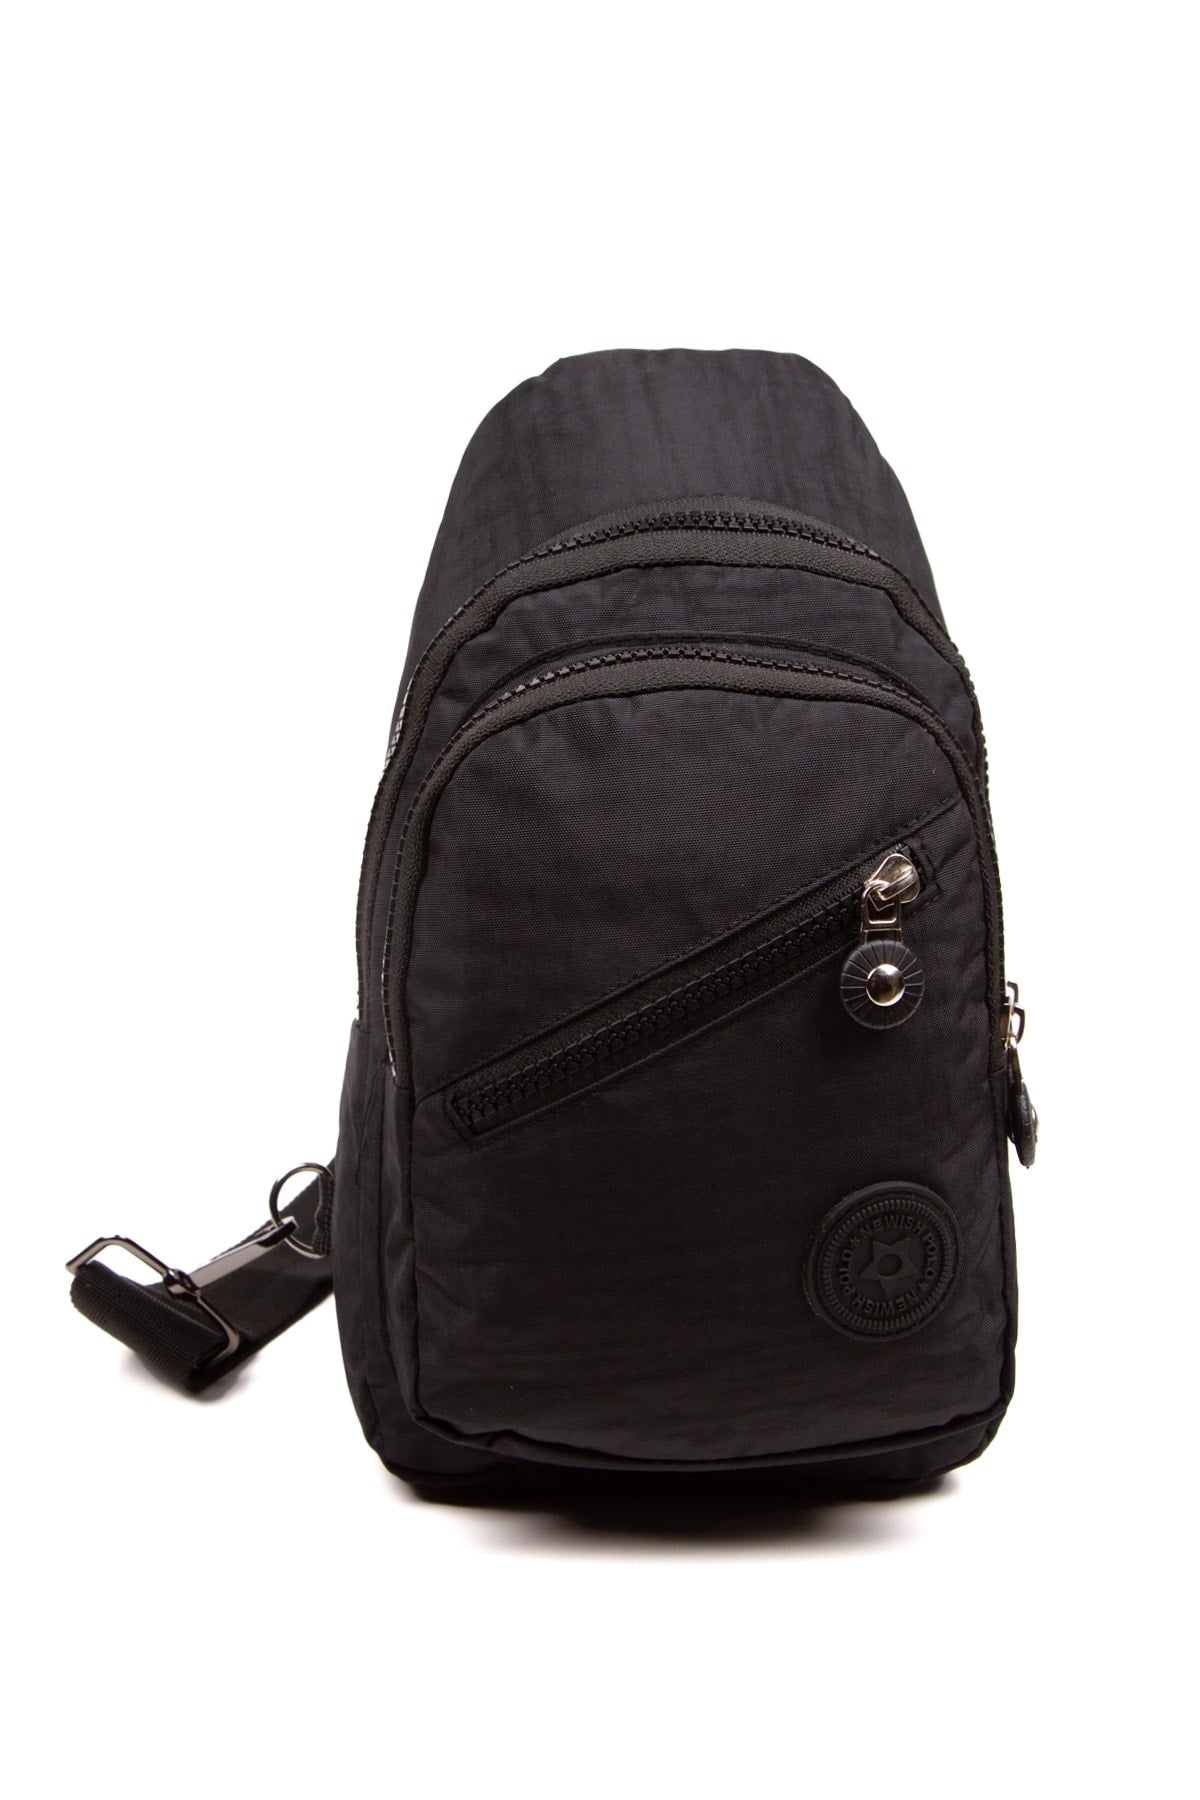 Unisex Crinkle Waterproof Bag, Crossbody Shoulder And Chest Bag, Bodybag, Black Color